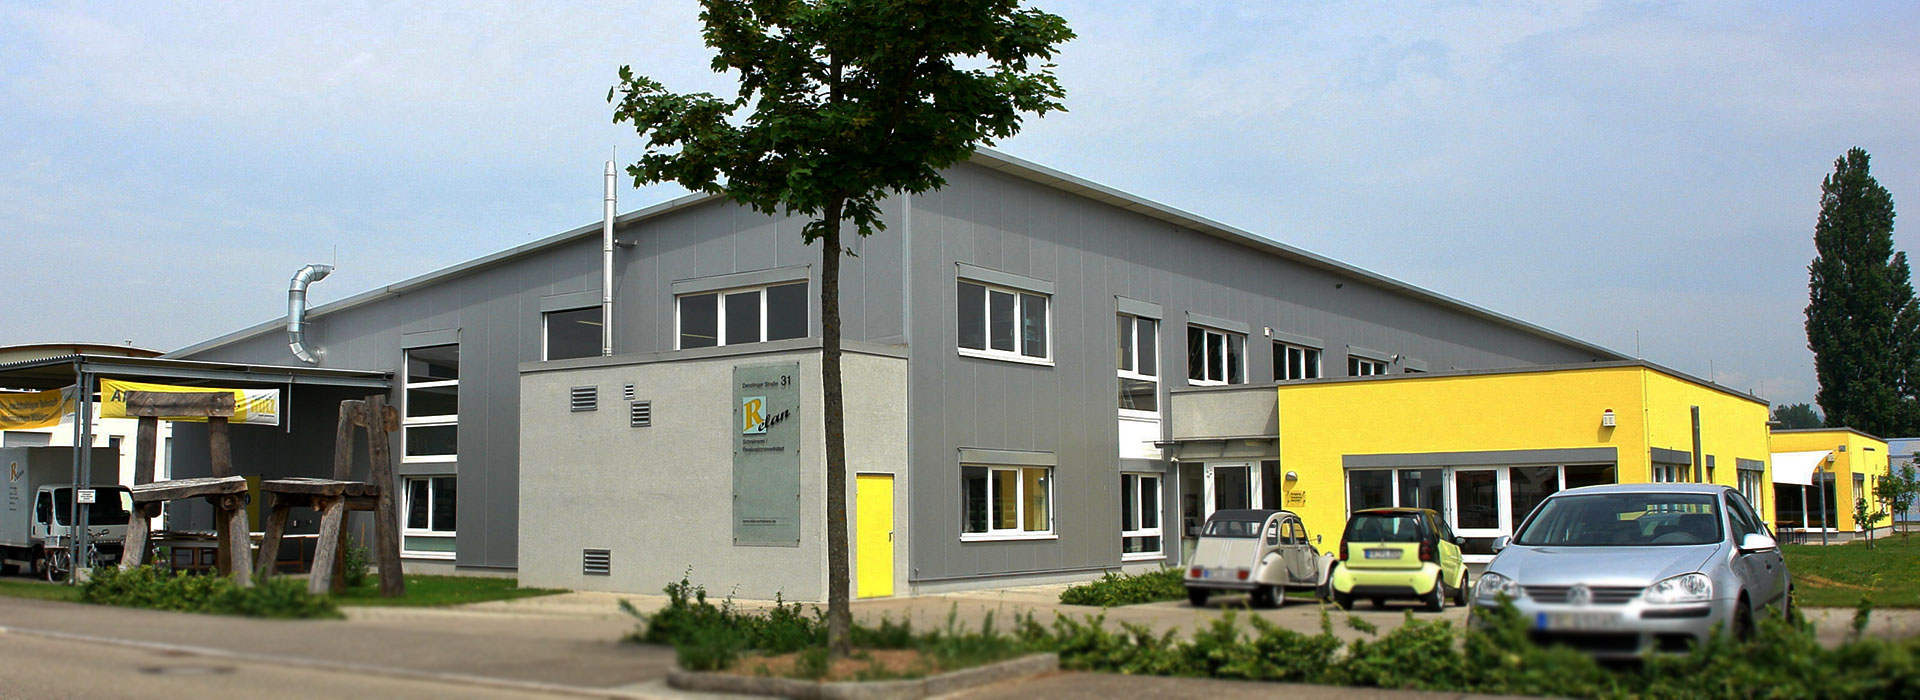 Anischt Firmensitz Relan Schreinerei Emmendingen